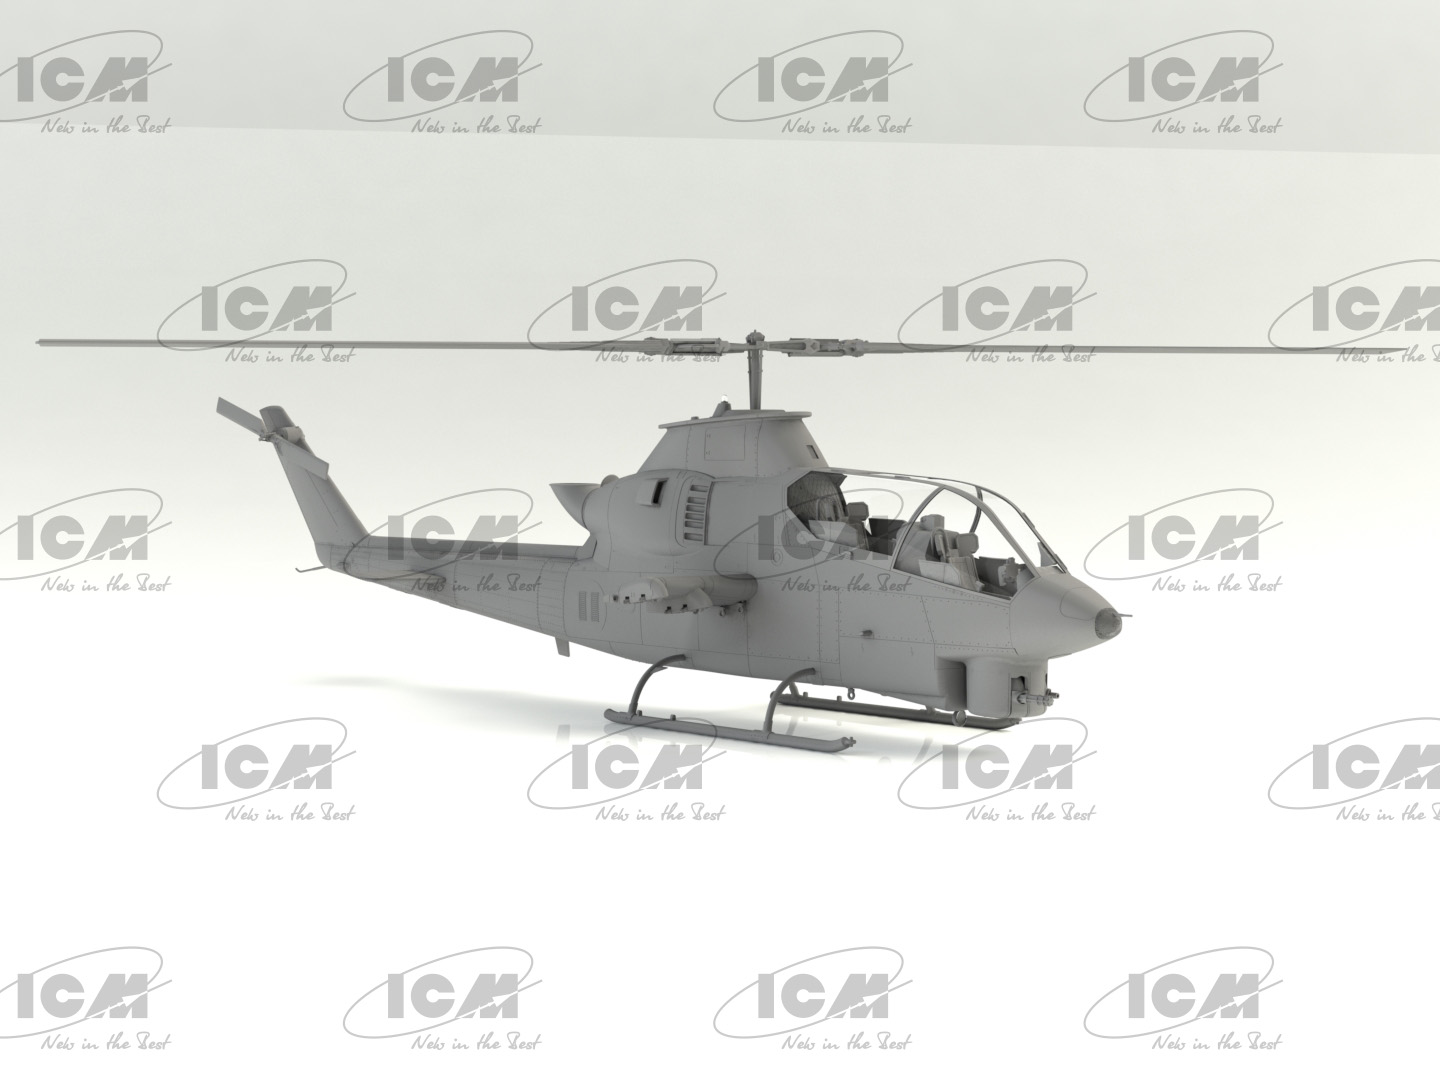 AH-1G Cobra (late production)